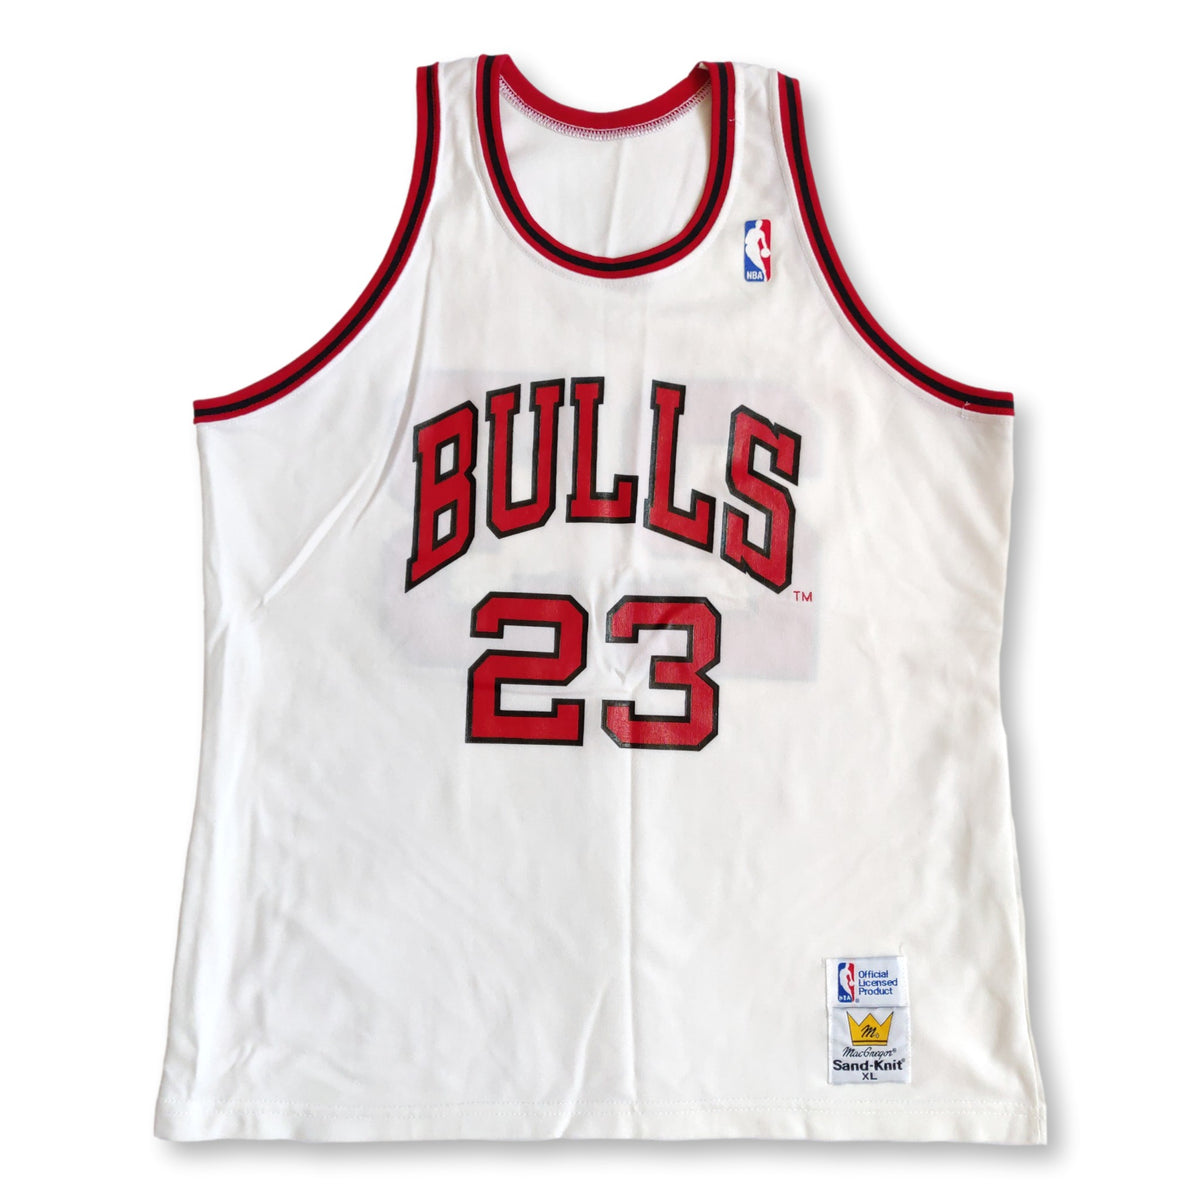 Bulls Jersey Retro -  UK